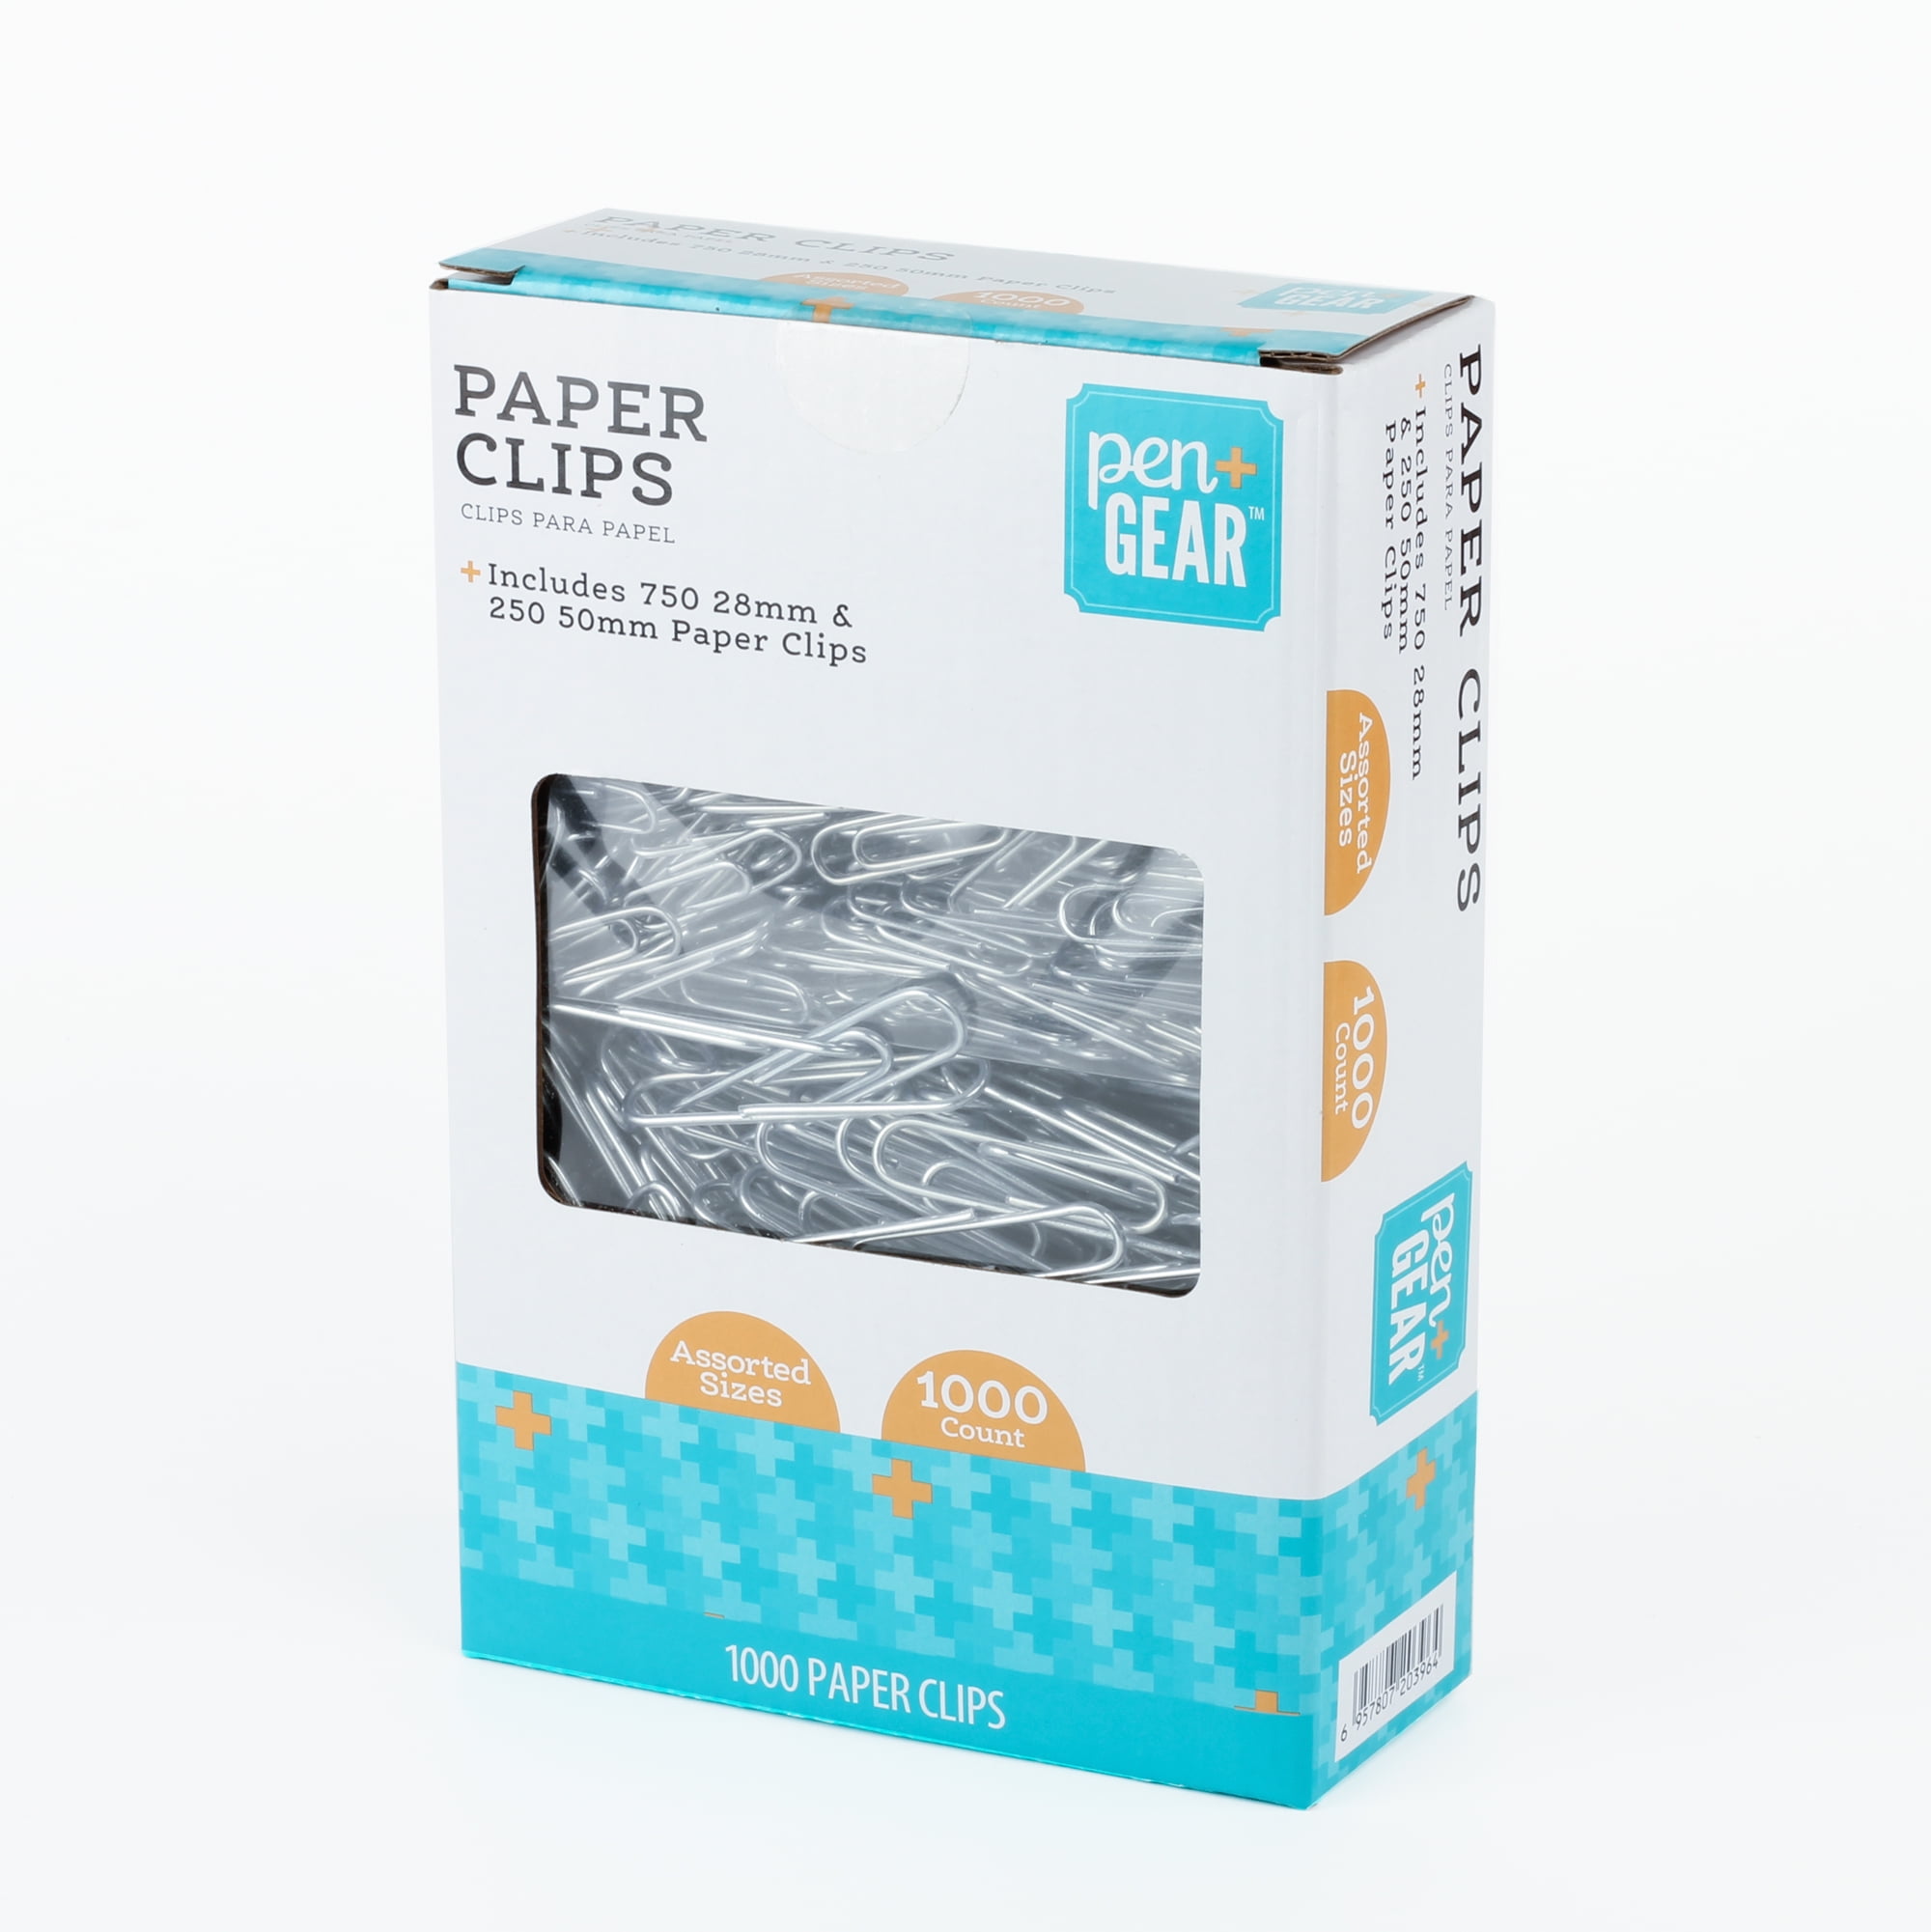 Wedo 901244601 Paper Clips 27 mm Metal Plastic Coating Black Set of 1000 in Transparent Box